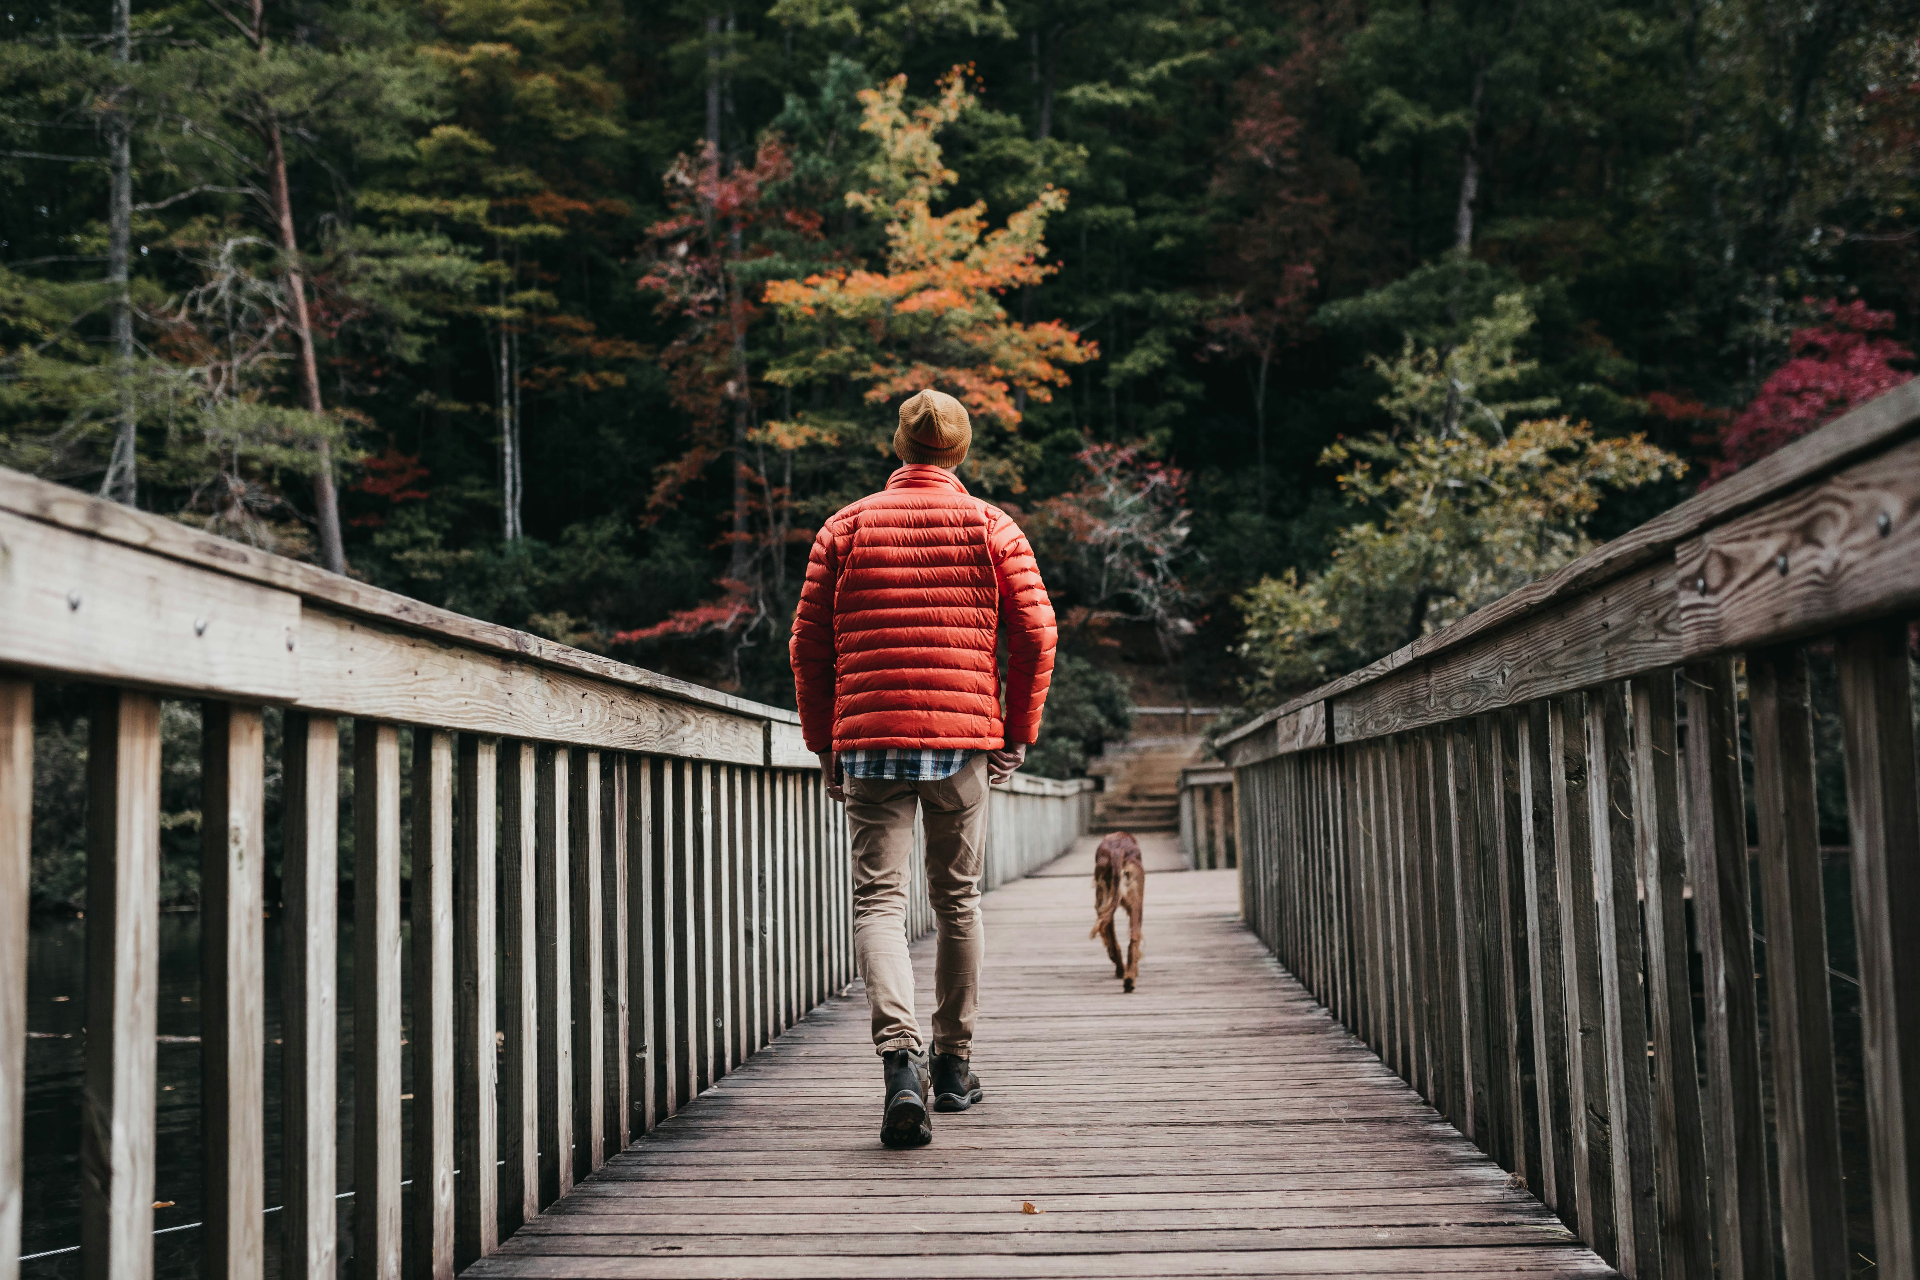 Man and dog walking. Image courtesy of Unsplash.com. https://unsplash.com/photos/man-walking-on-bridge-beside-dog-during-daytime-pjiwya5elWs